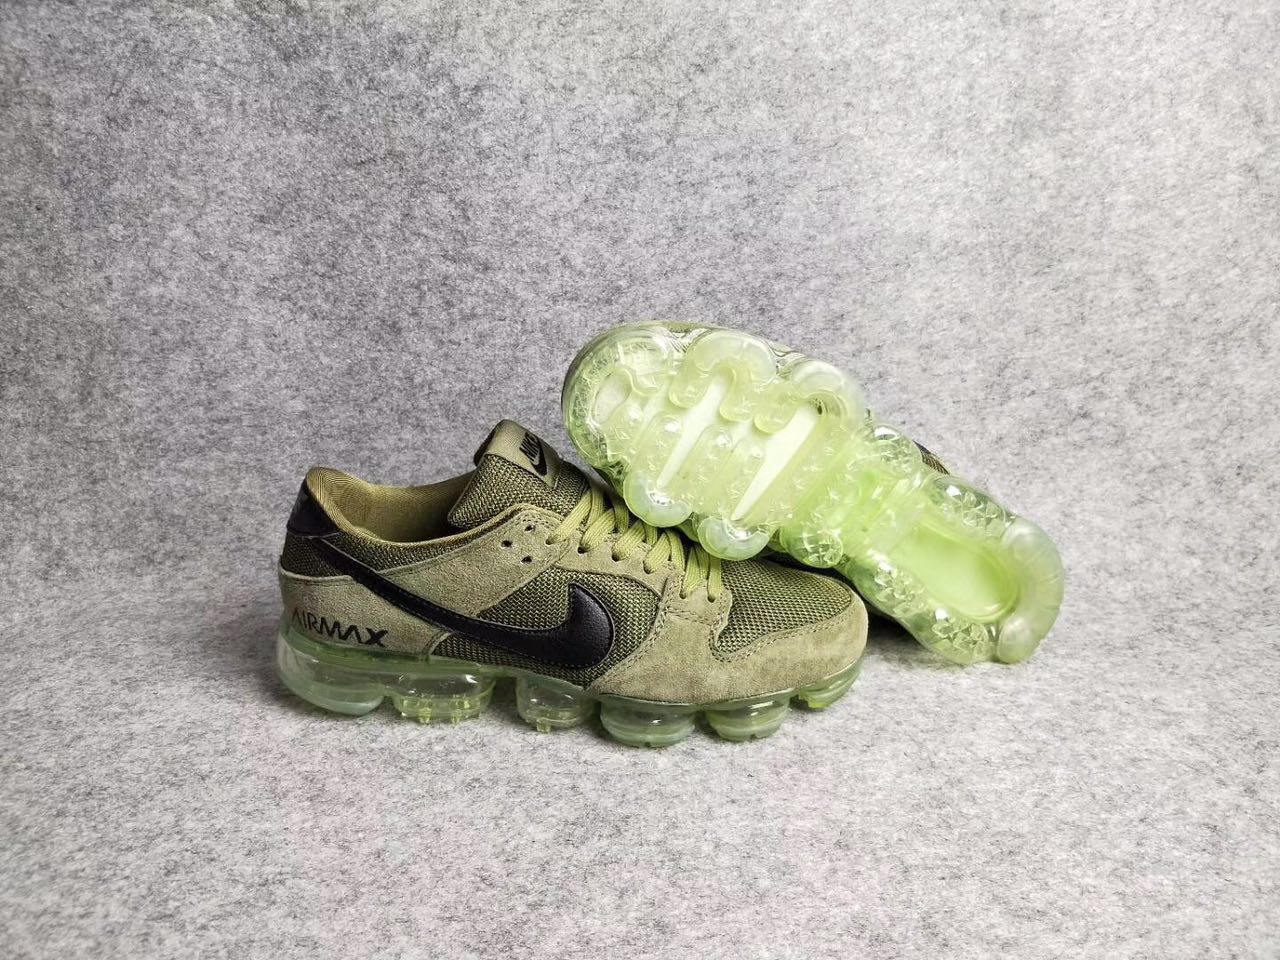 New Nike Air Max 2018 Army Green Black Shoes